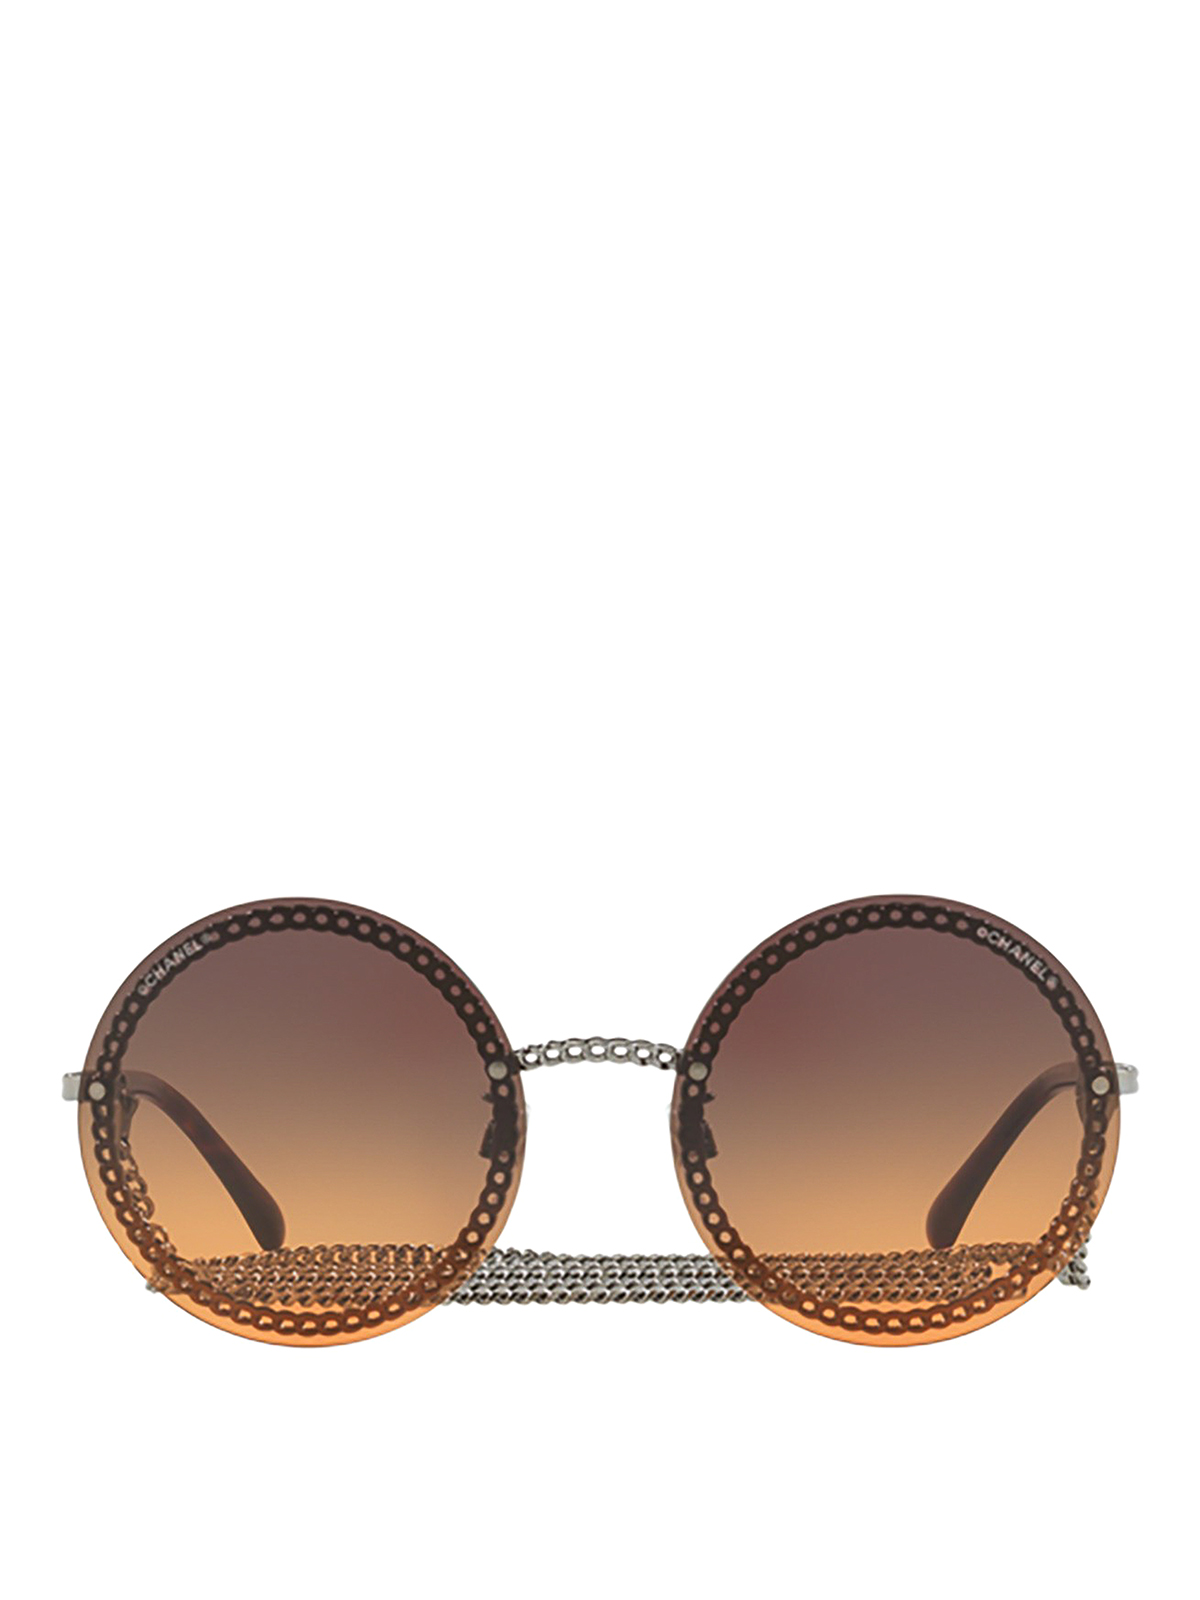 Chanel - Round Sunglasses - Gold Light Brown - Chanel Eyewear - Avvenice